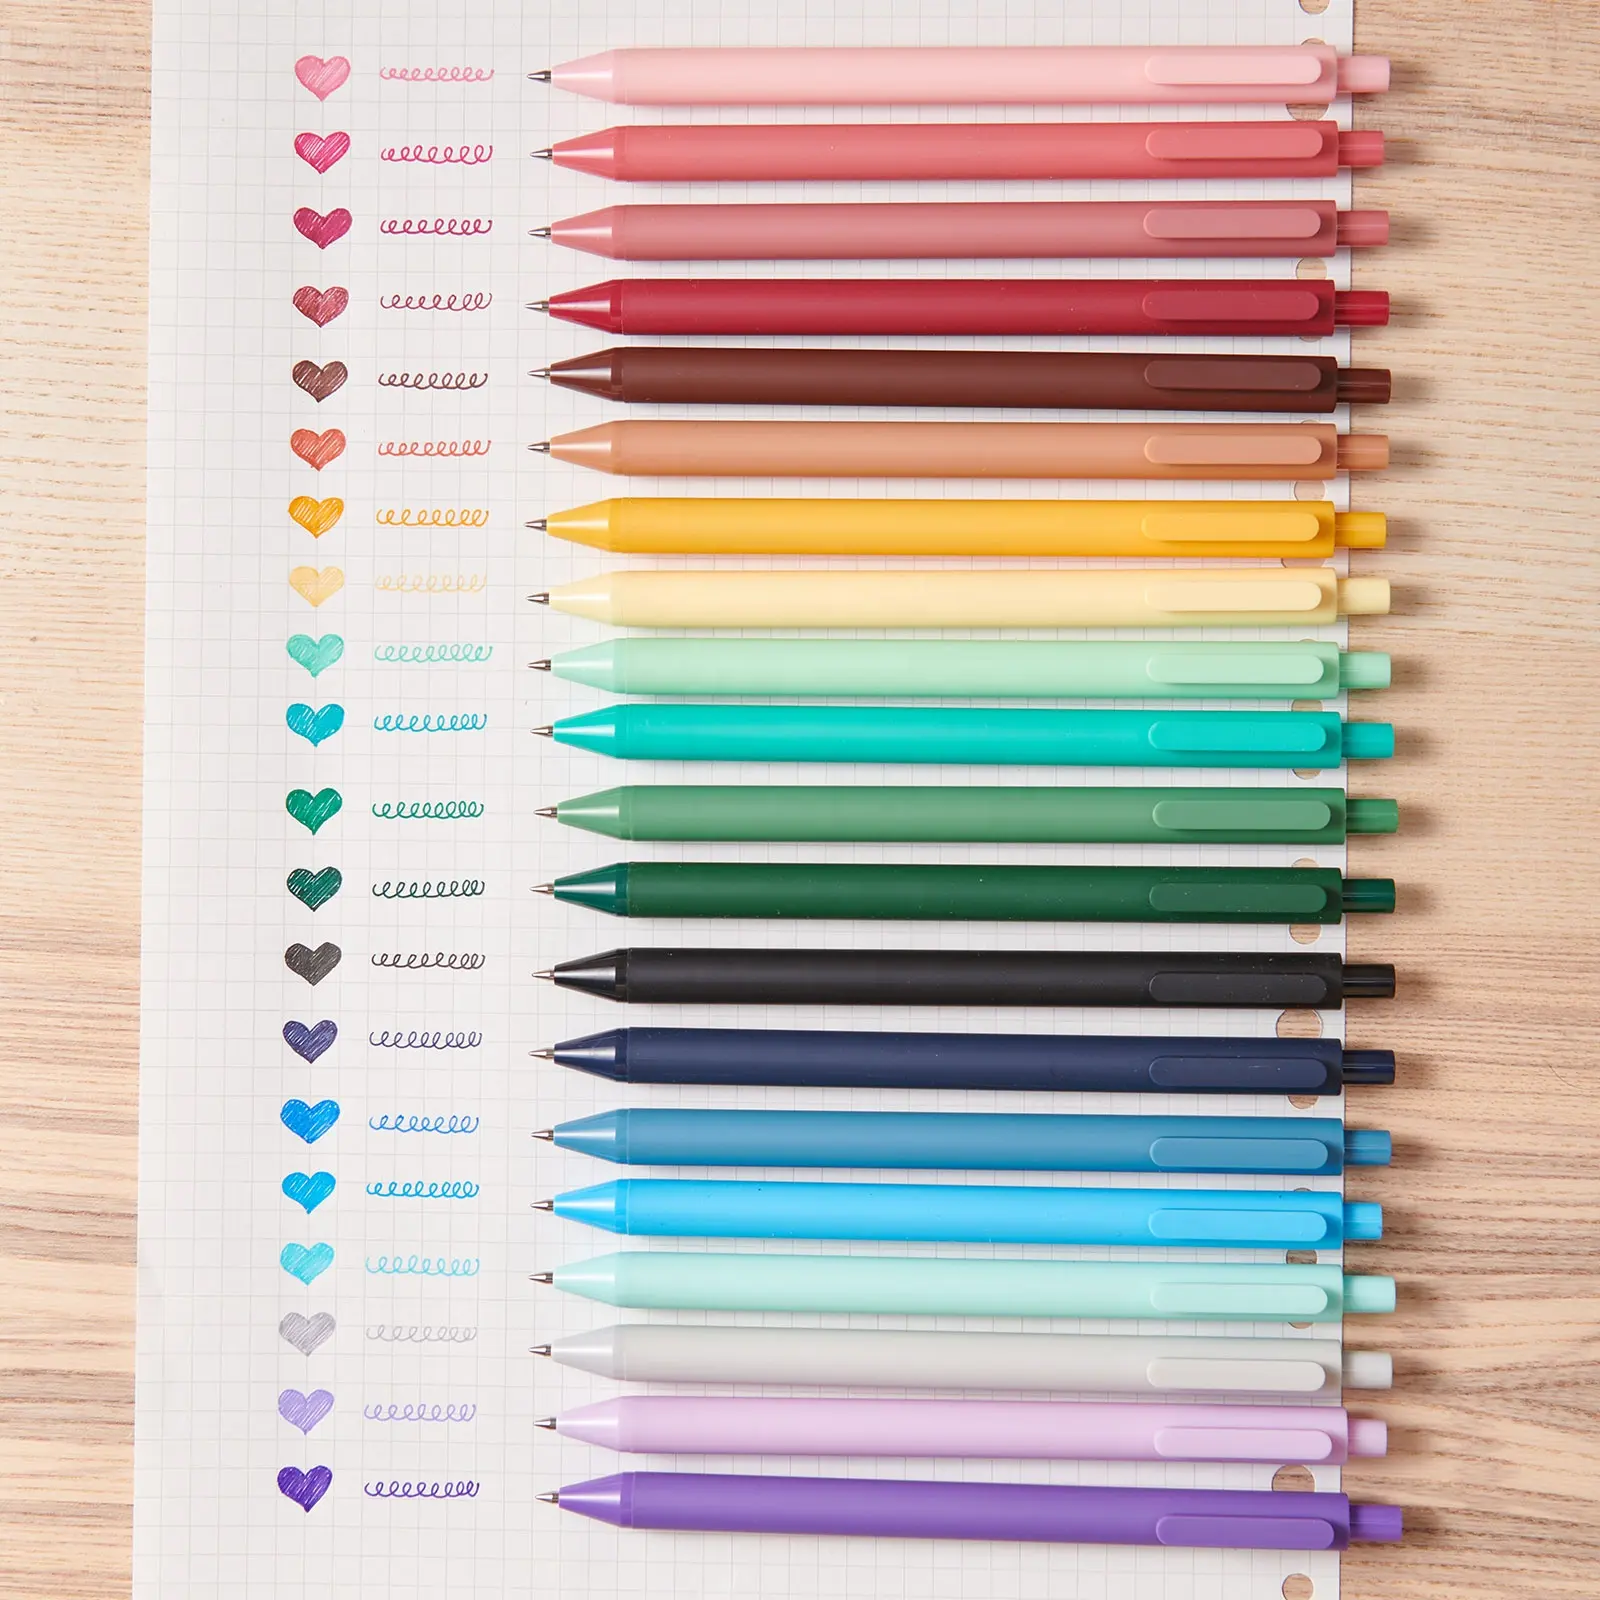 कको शुद्ध बॉलपॉइंट पेन मूल डिजाइन बहु-रंग 1.0/1.2 मिमी बिंदु गेंद पेन प्रचार प्यारे स्टेशनरी स्कूल कार्यालय